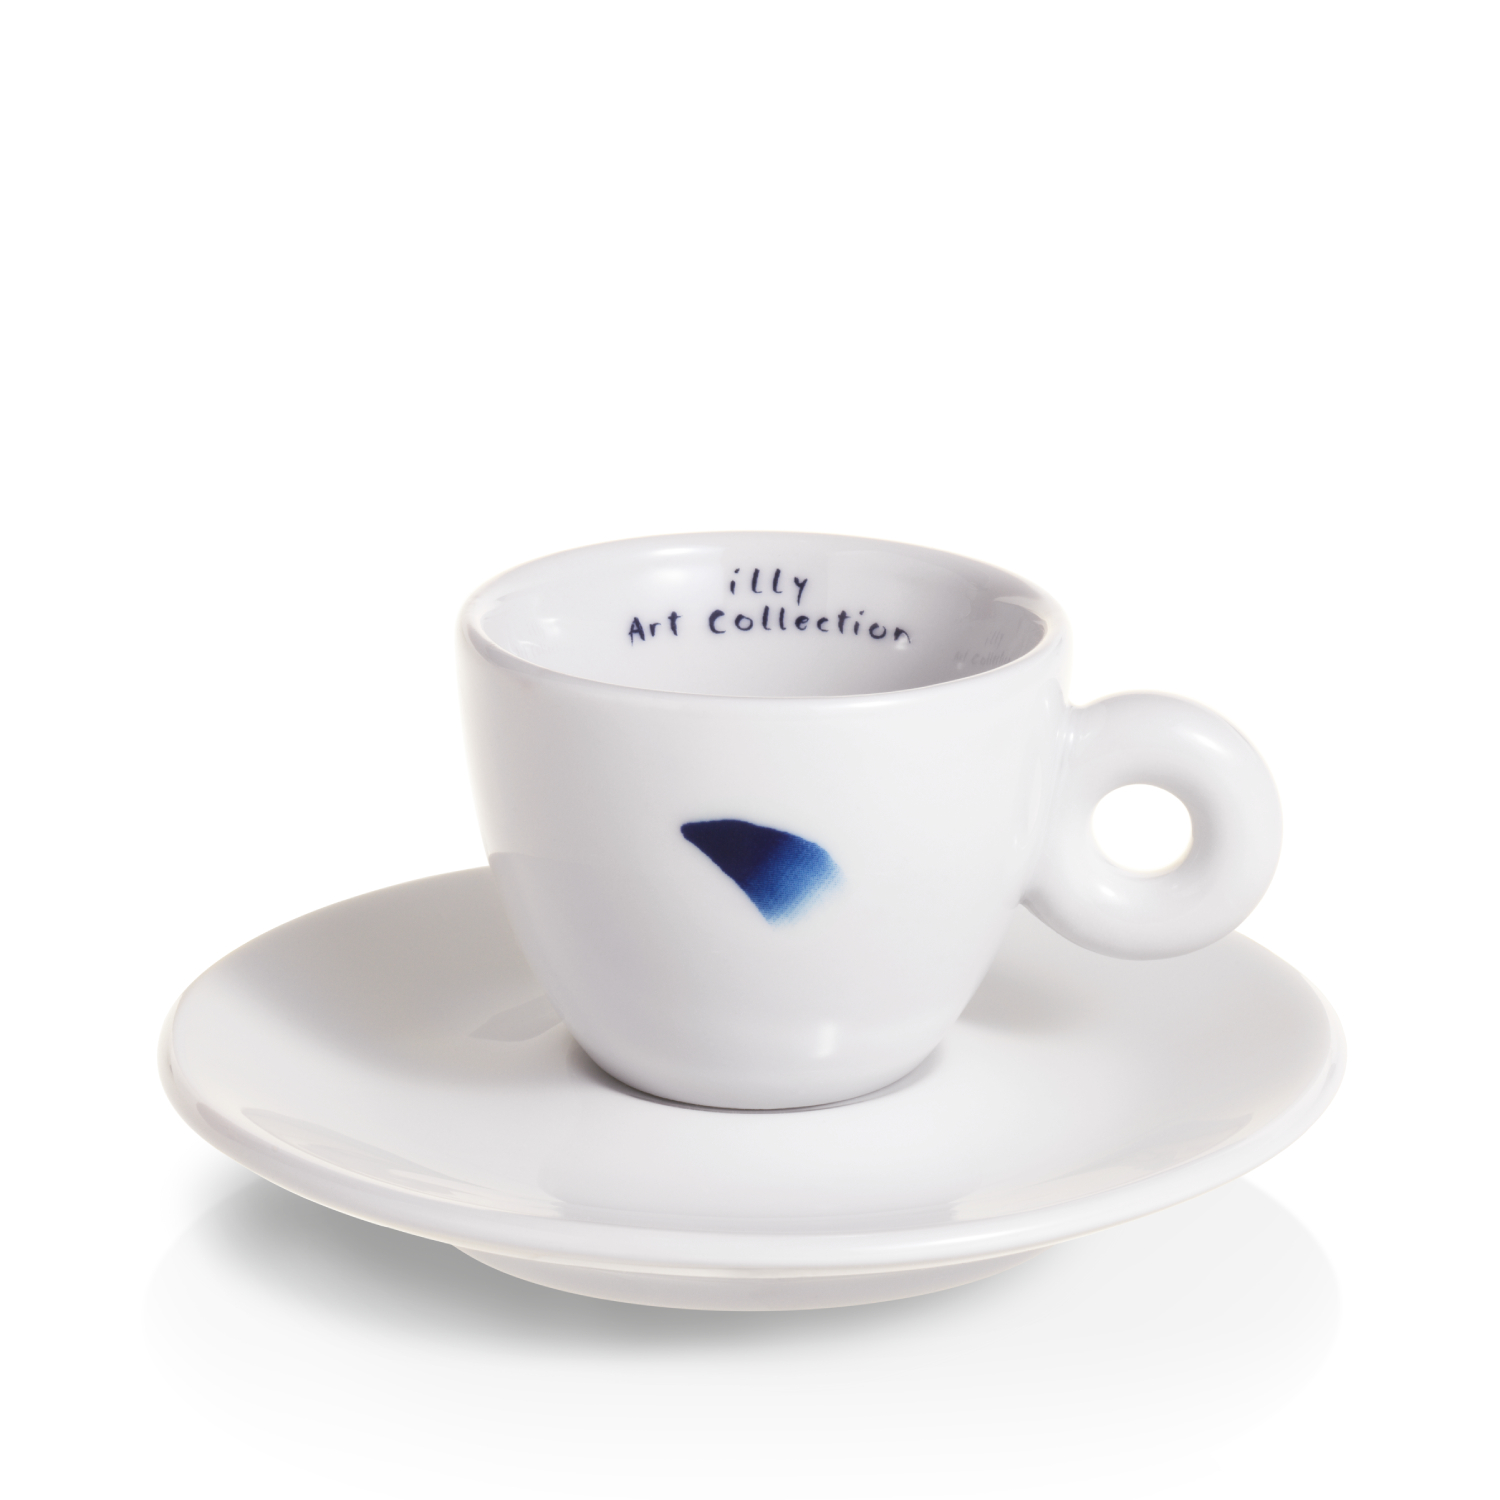 illy Art Collection LEE UFAN Σετ Δώρου 2 Espresso Cups, Φλιτζάνια , 02-02-2017